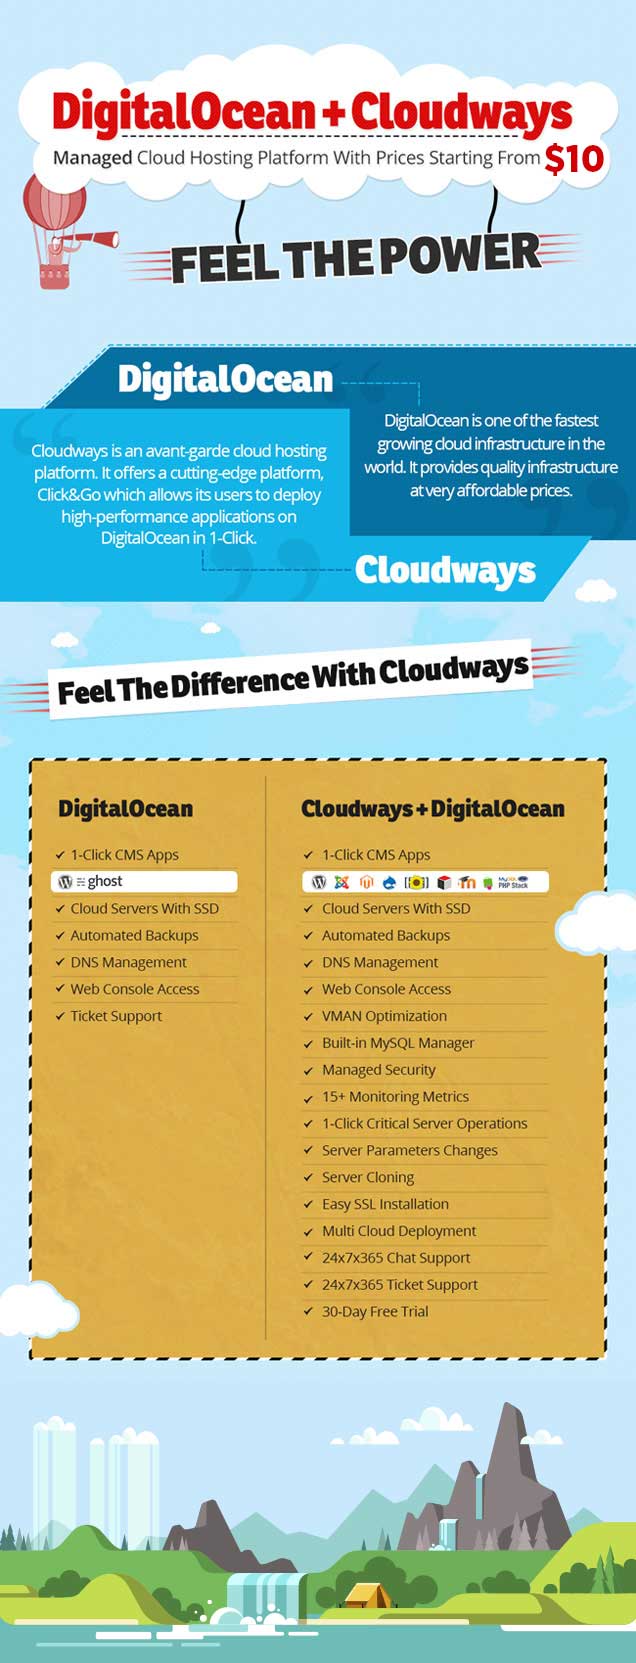 DigitalOcean + Cloudways